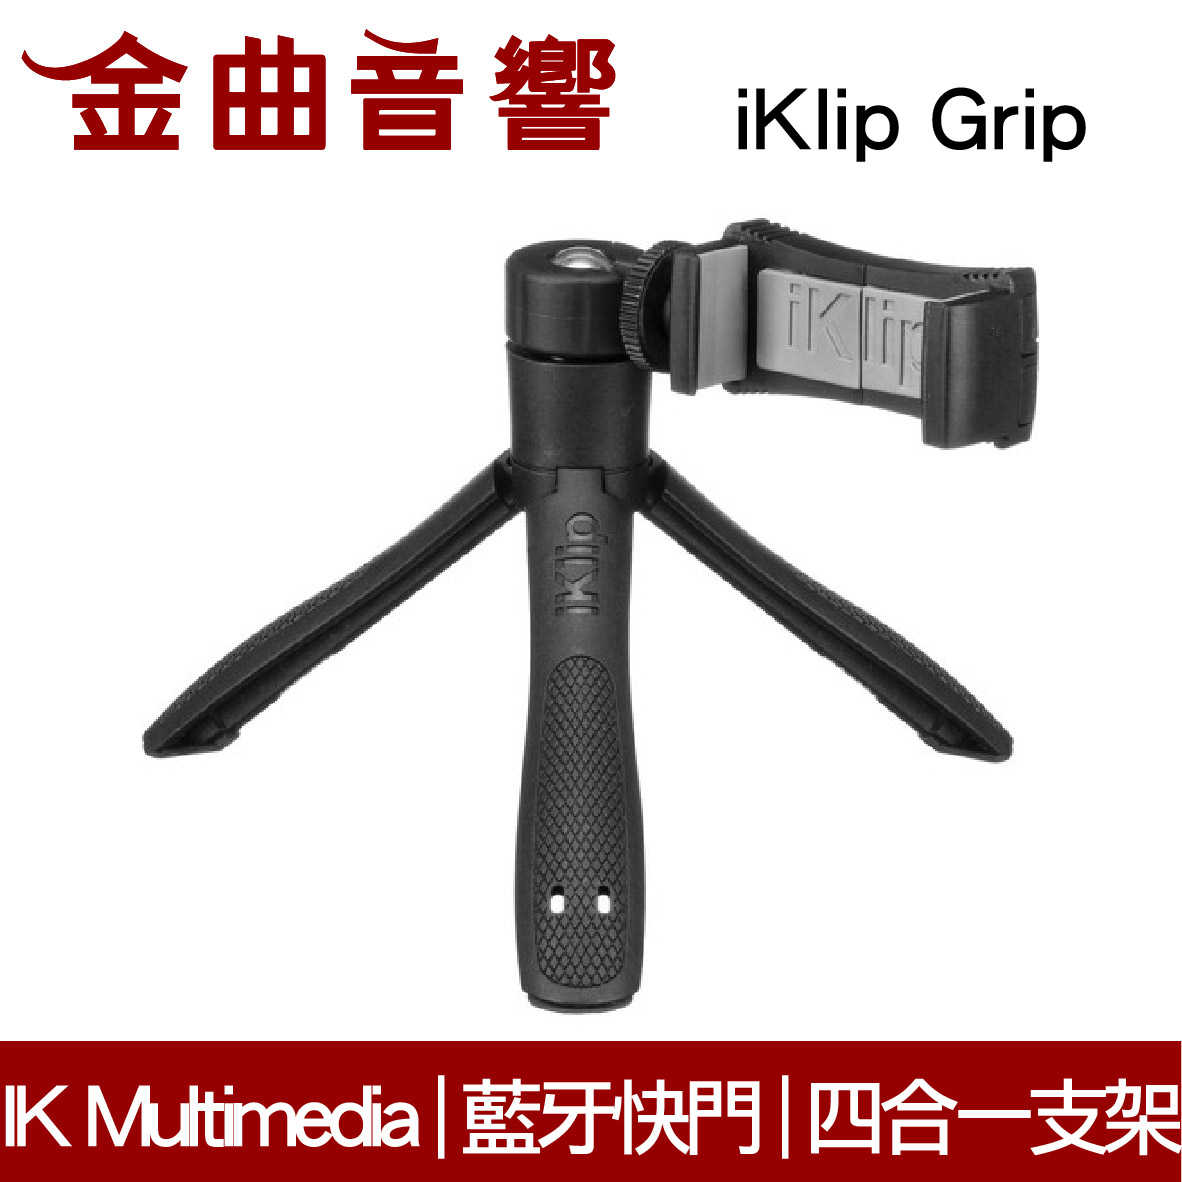 IK Multimedia iKlip Grip 多功能 藍芽 自拍棒 腳架 | 金曲音響